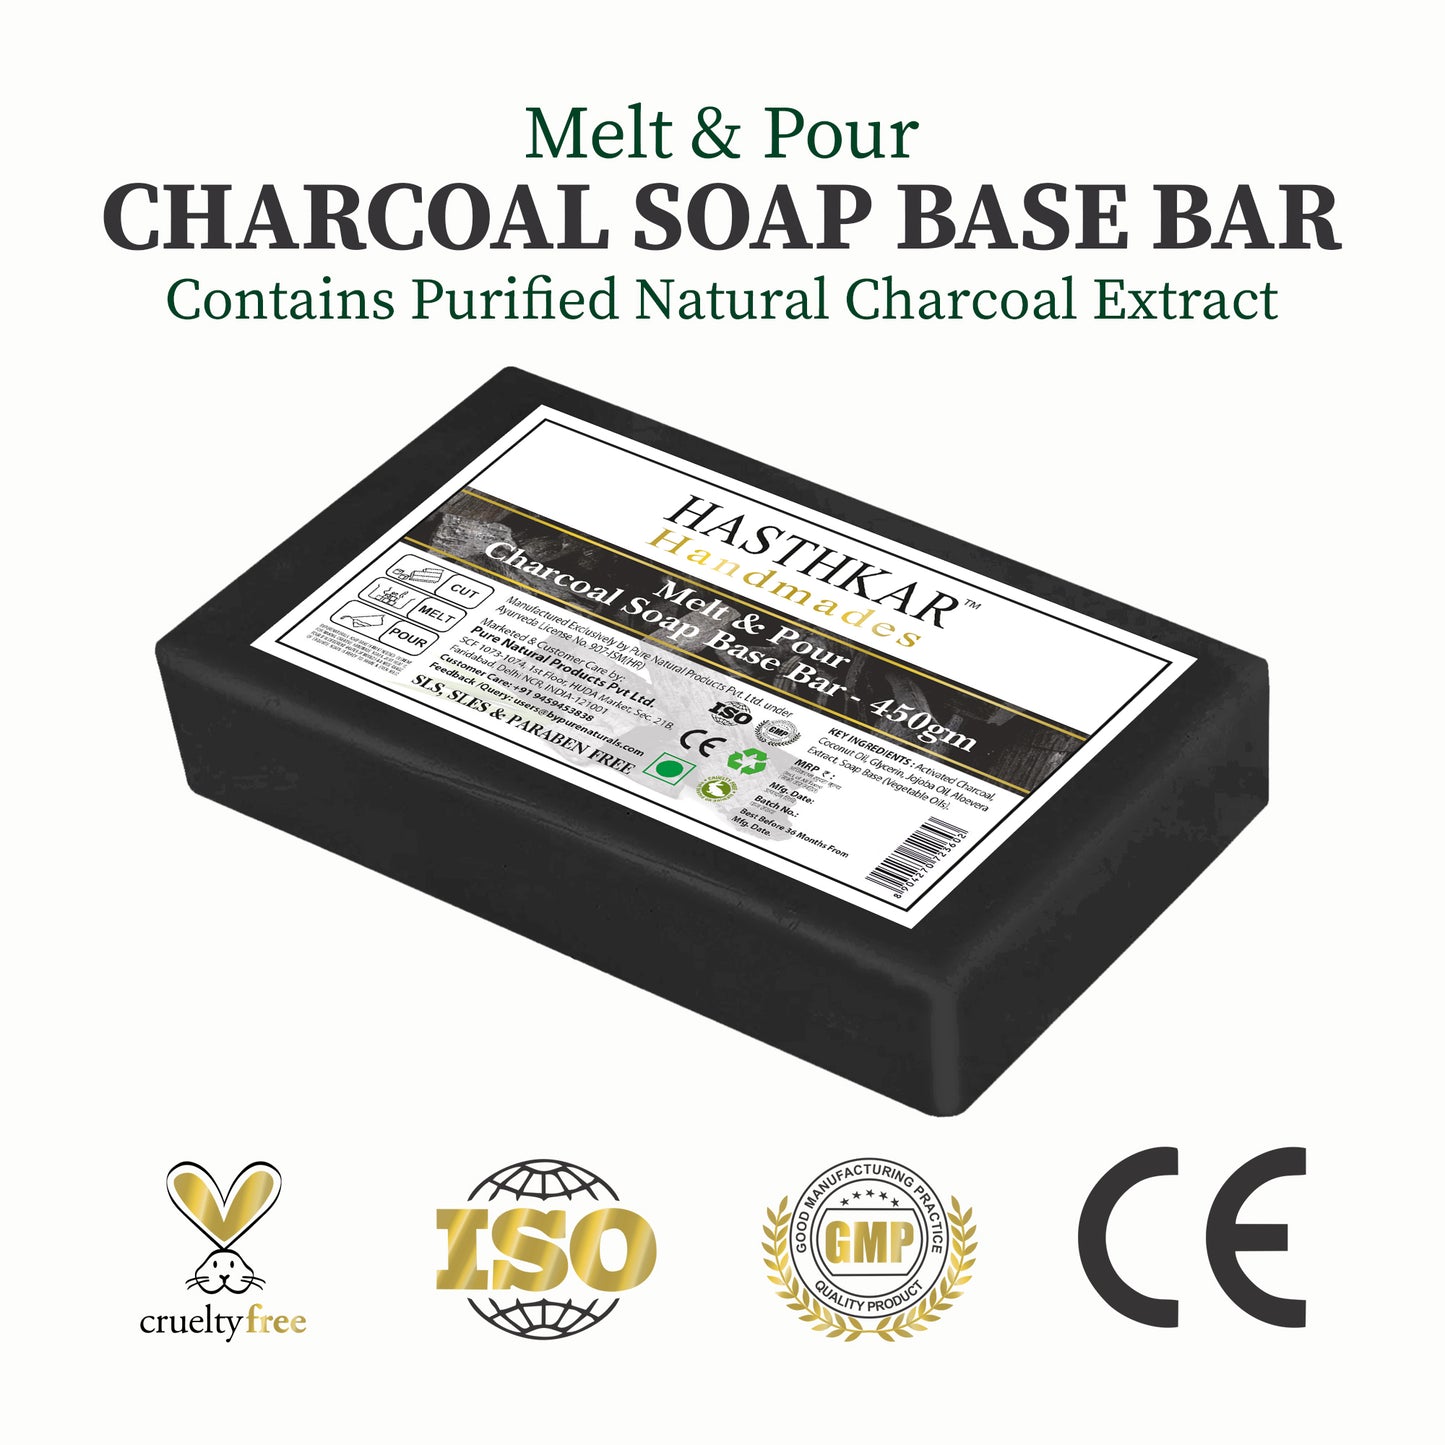 Hasthkar Handmades Charcoal SLS Paraben Free Soap base (pack of 2) 450gm